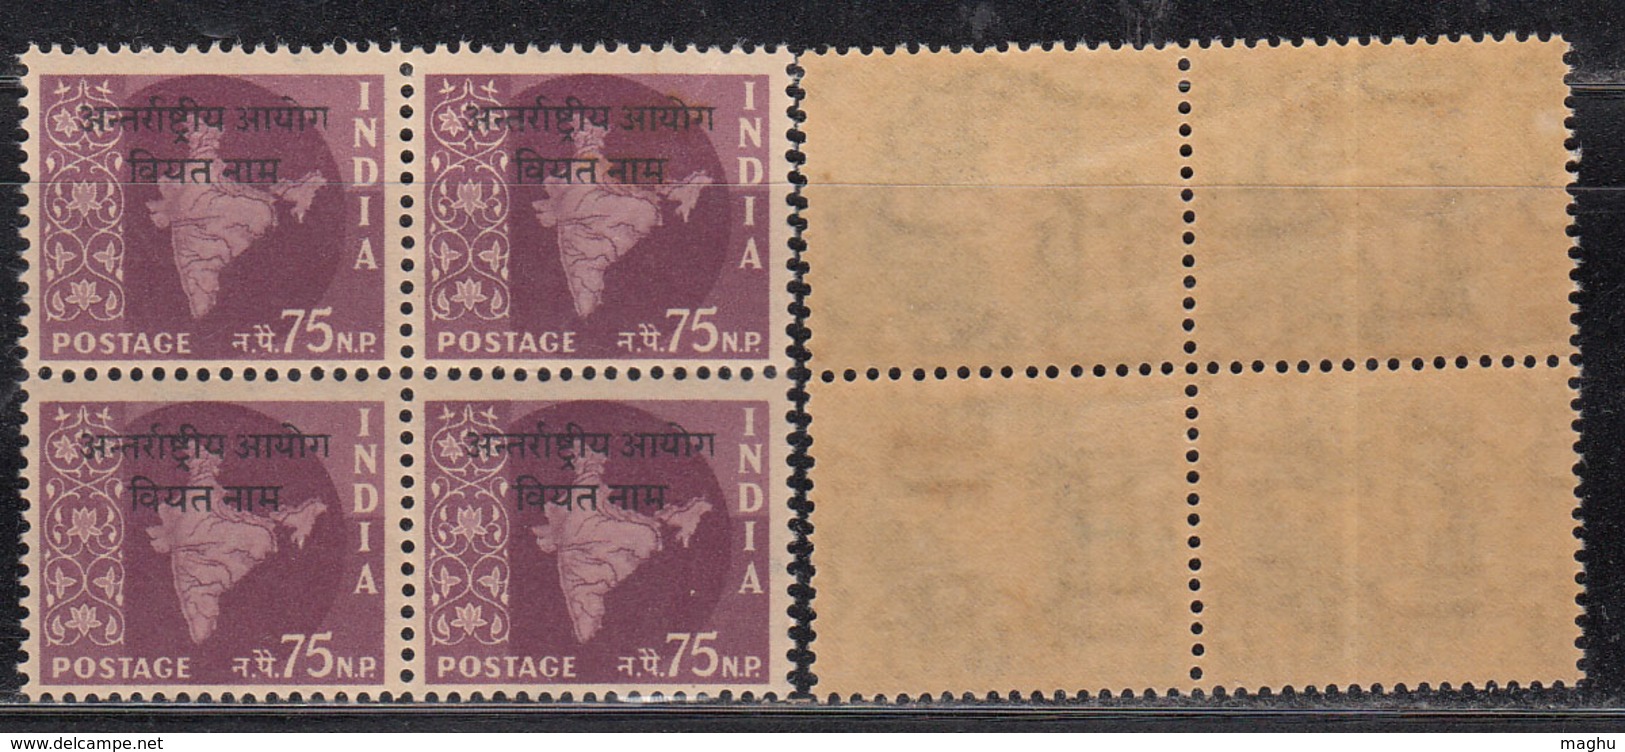 Block Of 4, 75np Ovpt Vietnam On Map Series,  India MNH 1962, Ashokan Watermark, - Franquicia Militar